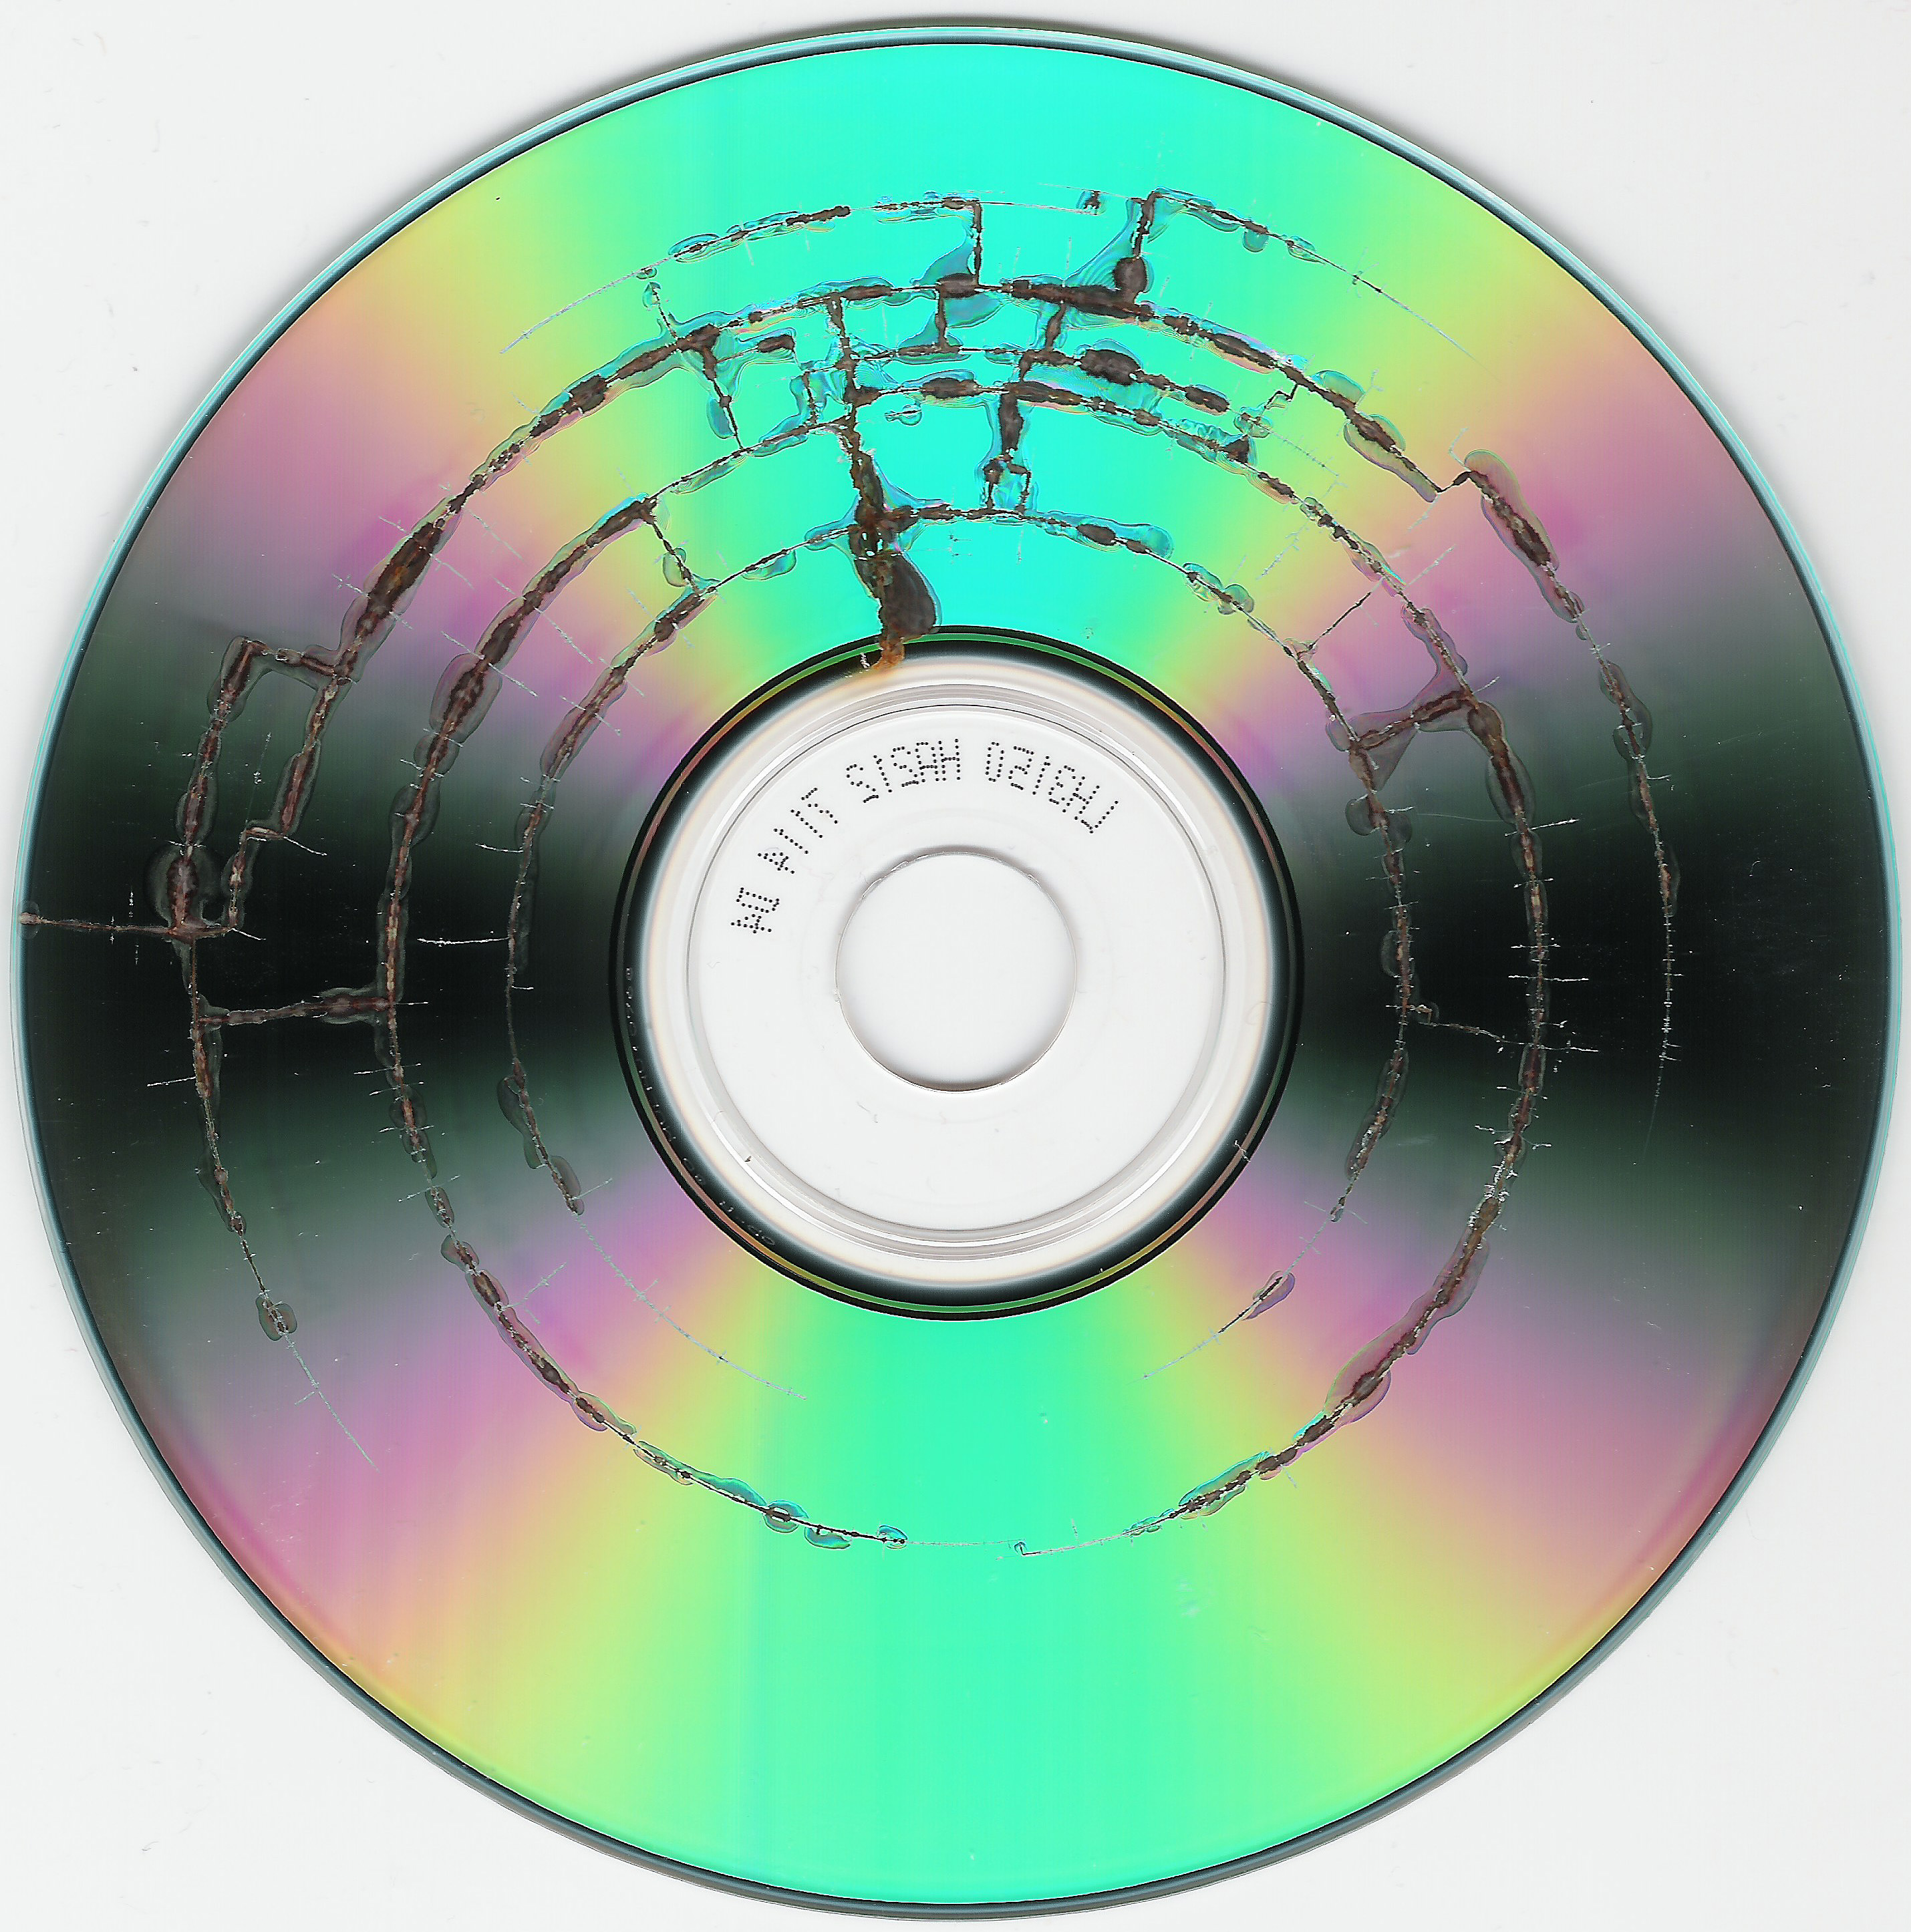 File:Microwaved-CD.jpg - Wikipedia